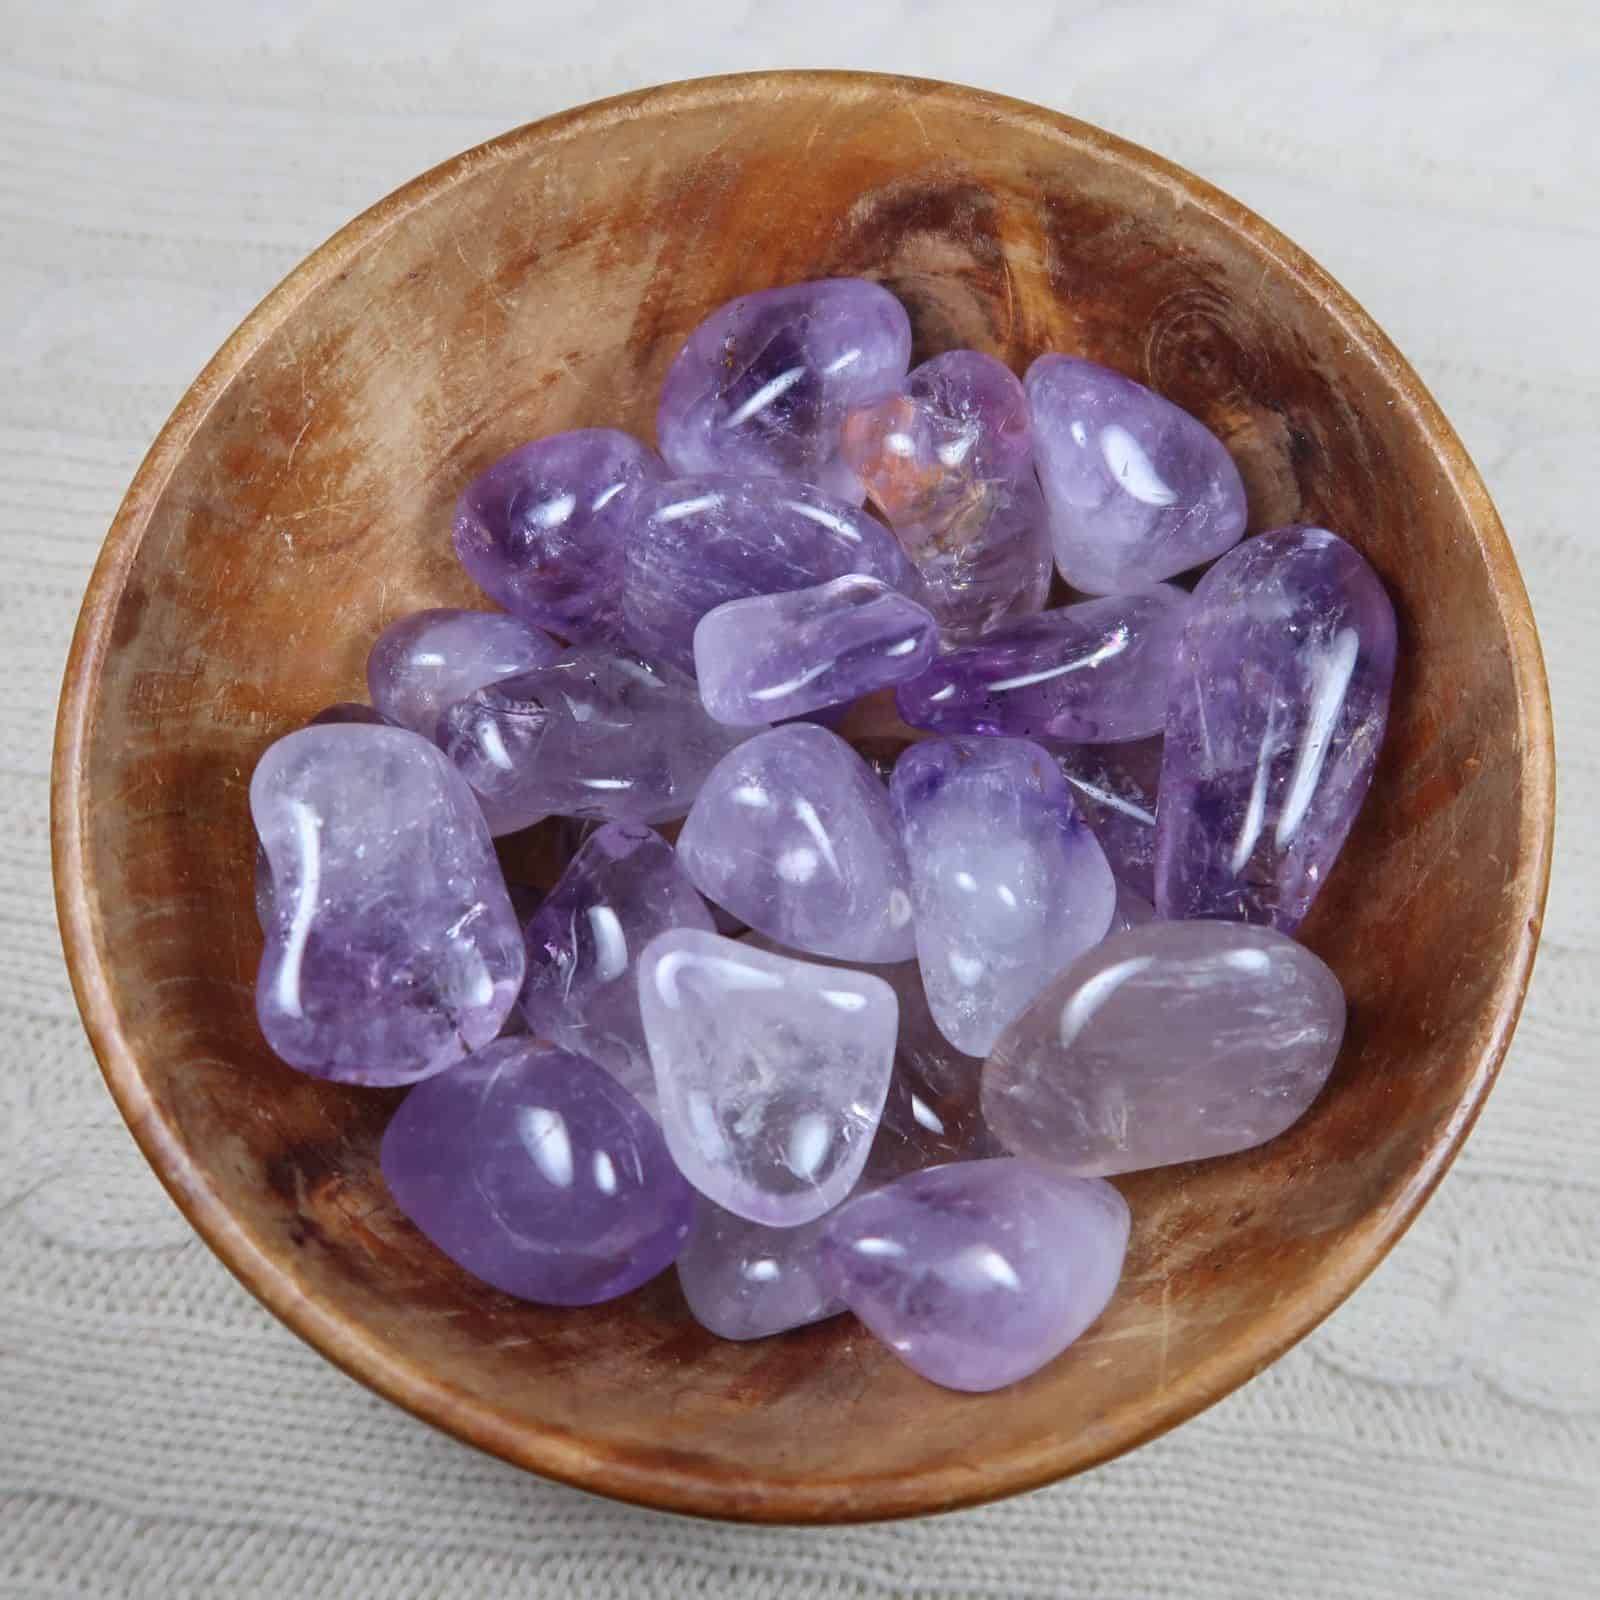 Tumbled Amethyst - Buy Amethyst tumblestones online - Crystal Healing